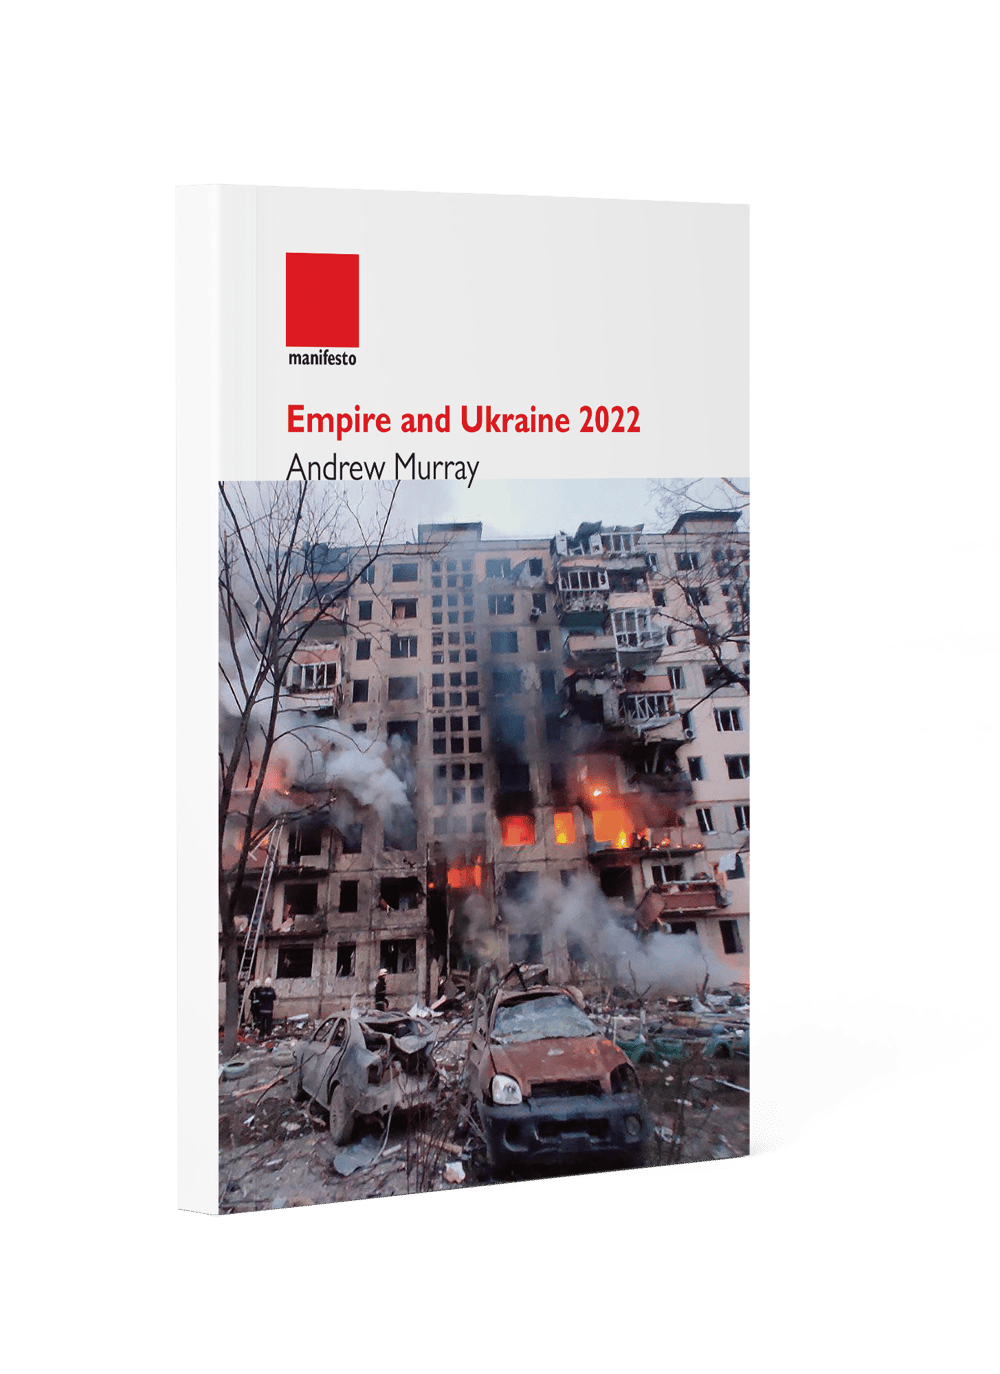 The Empire and Ukraine (2022)